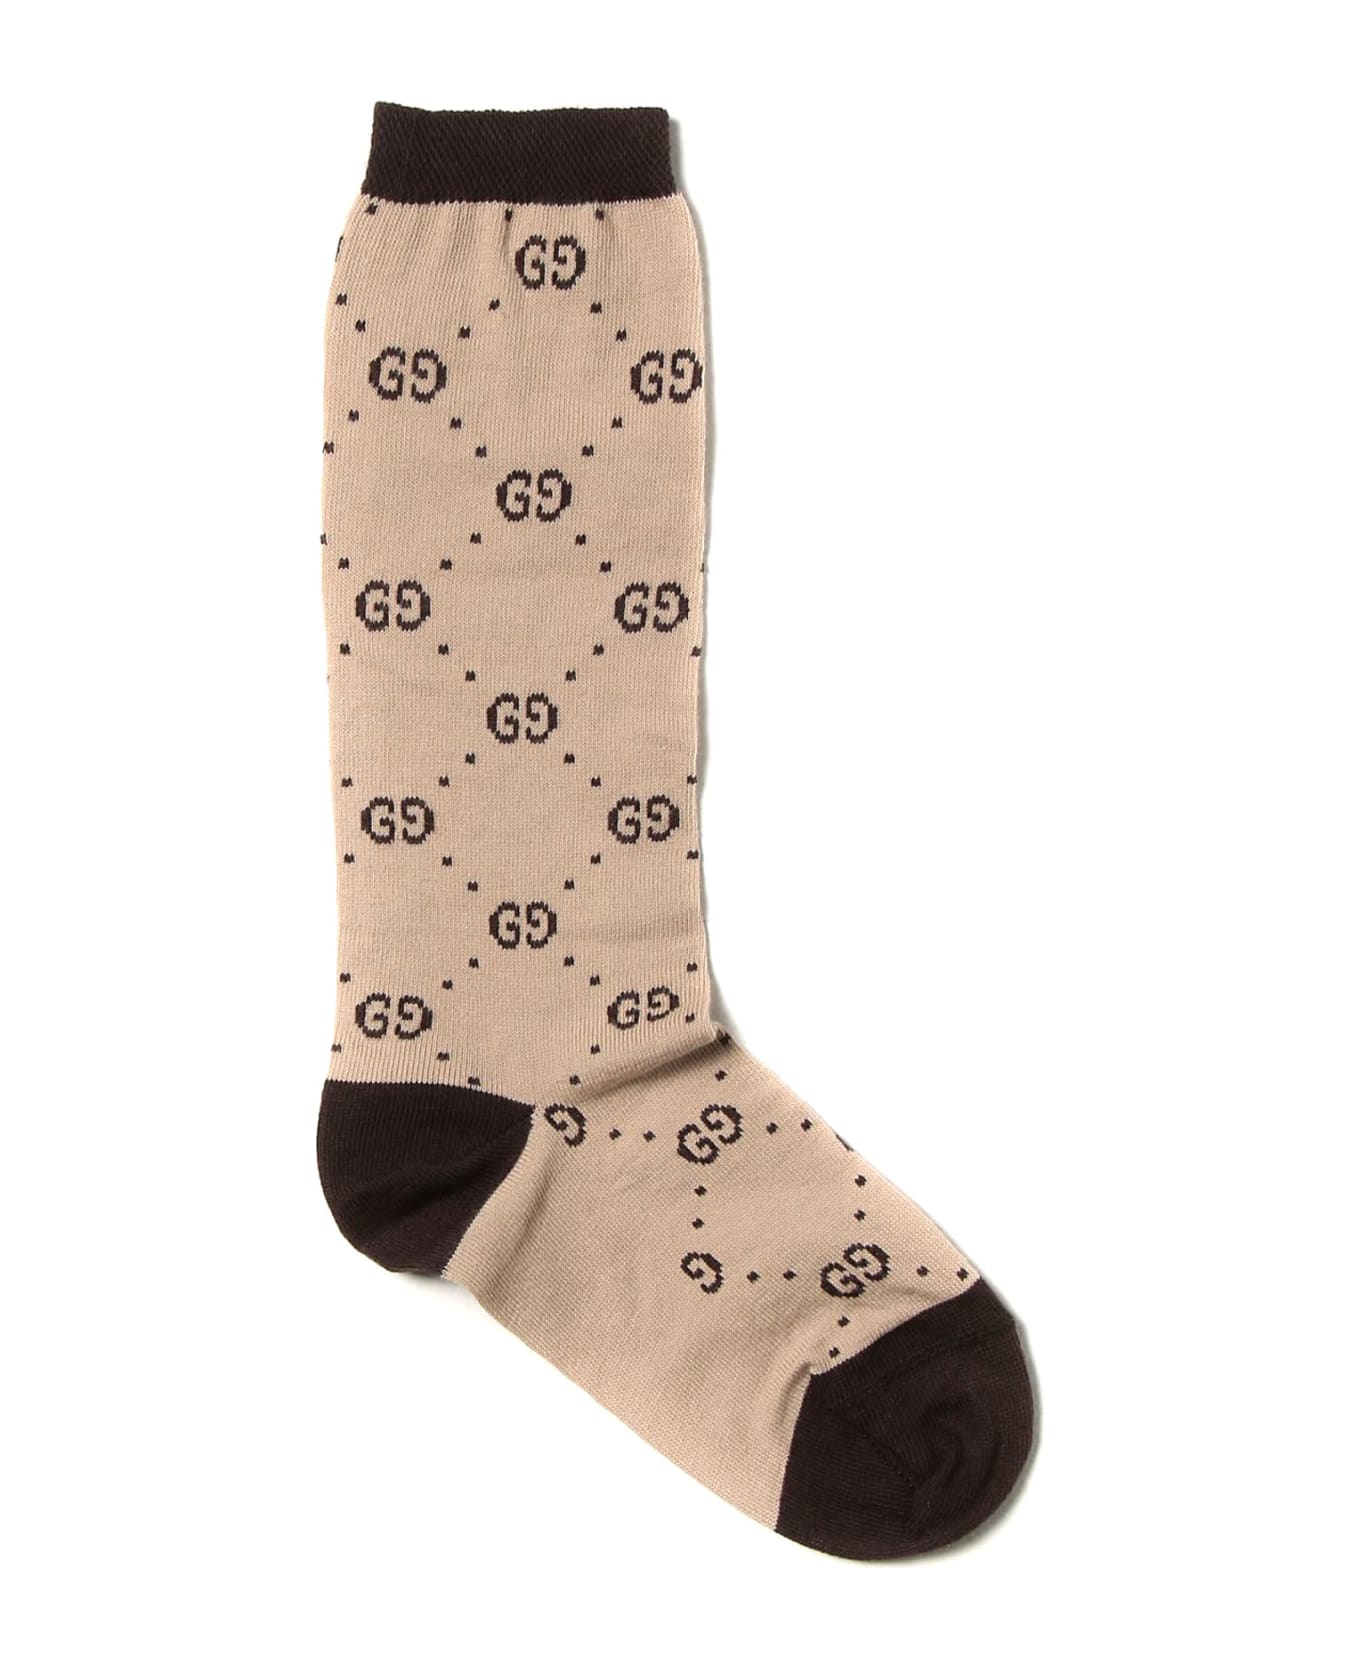 Gucci sseletui Children's Cotton Gg Socks - Beige